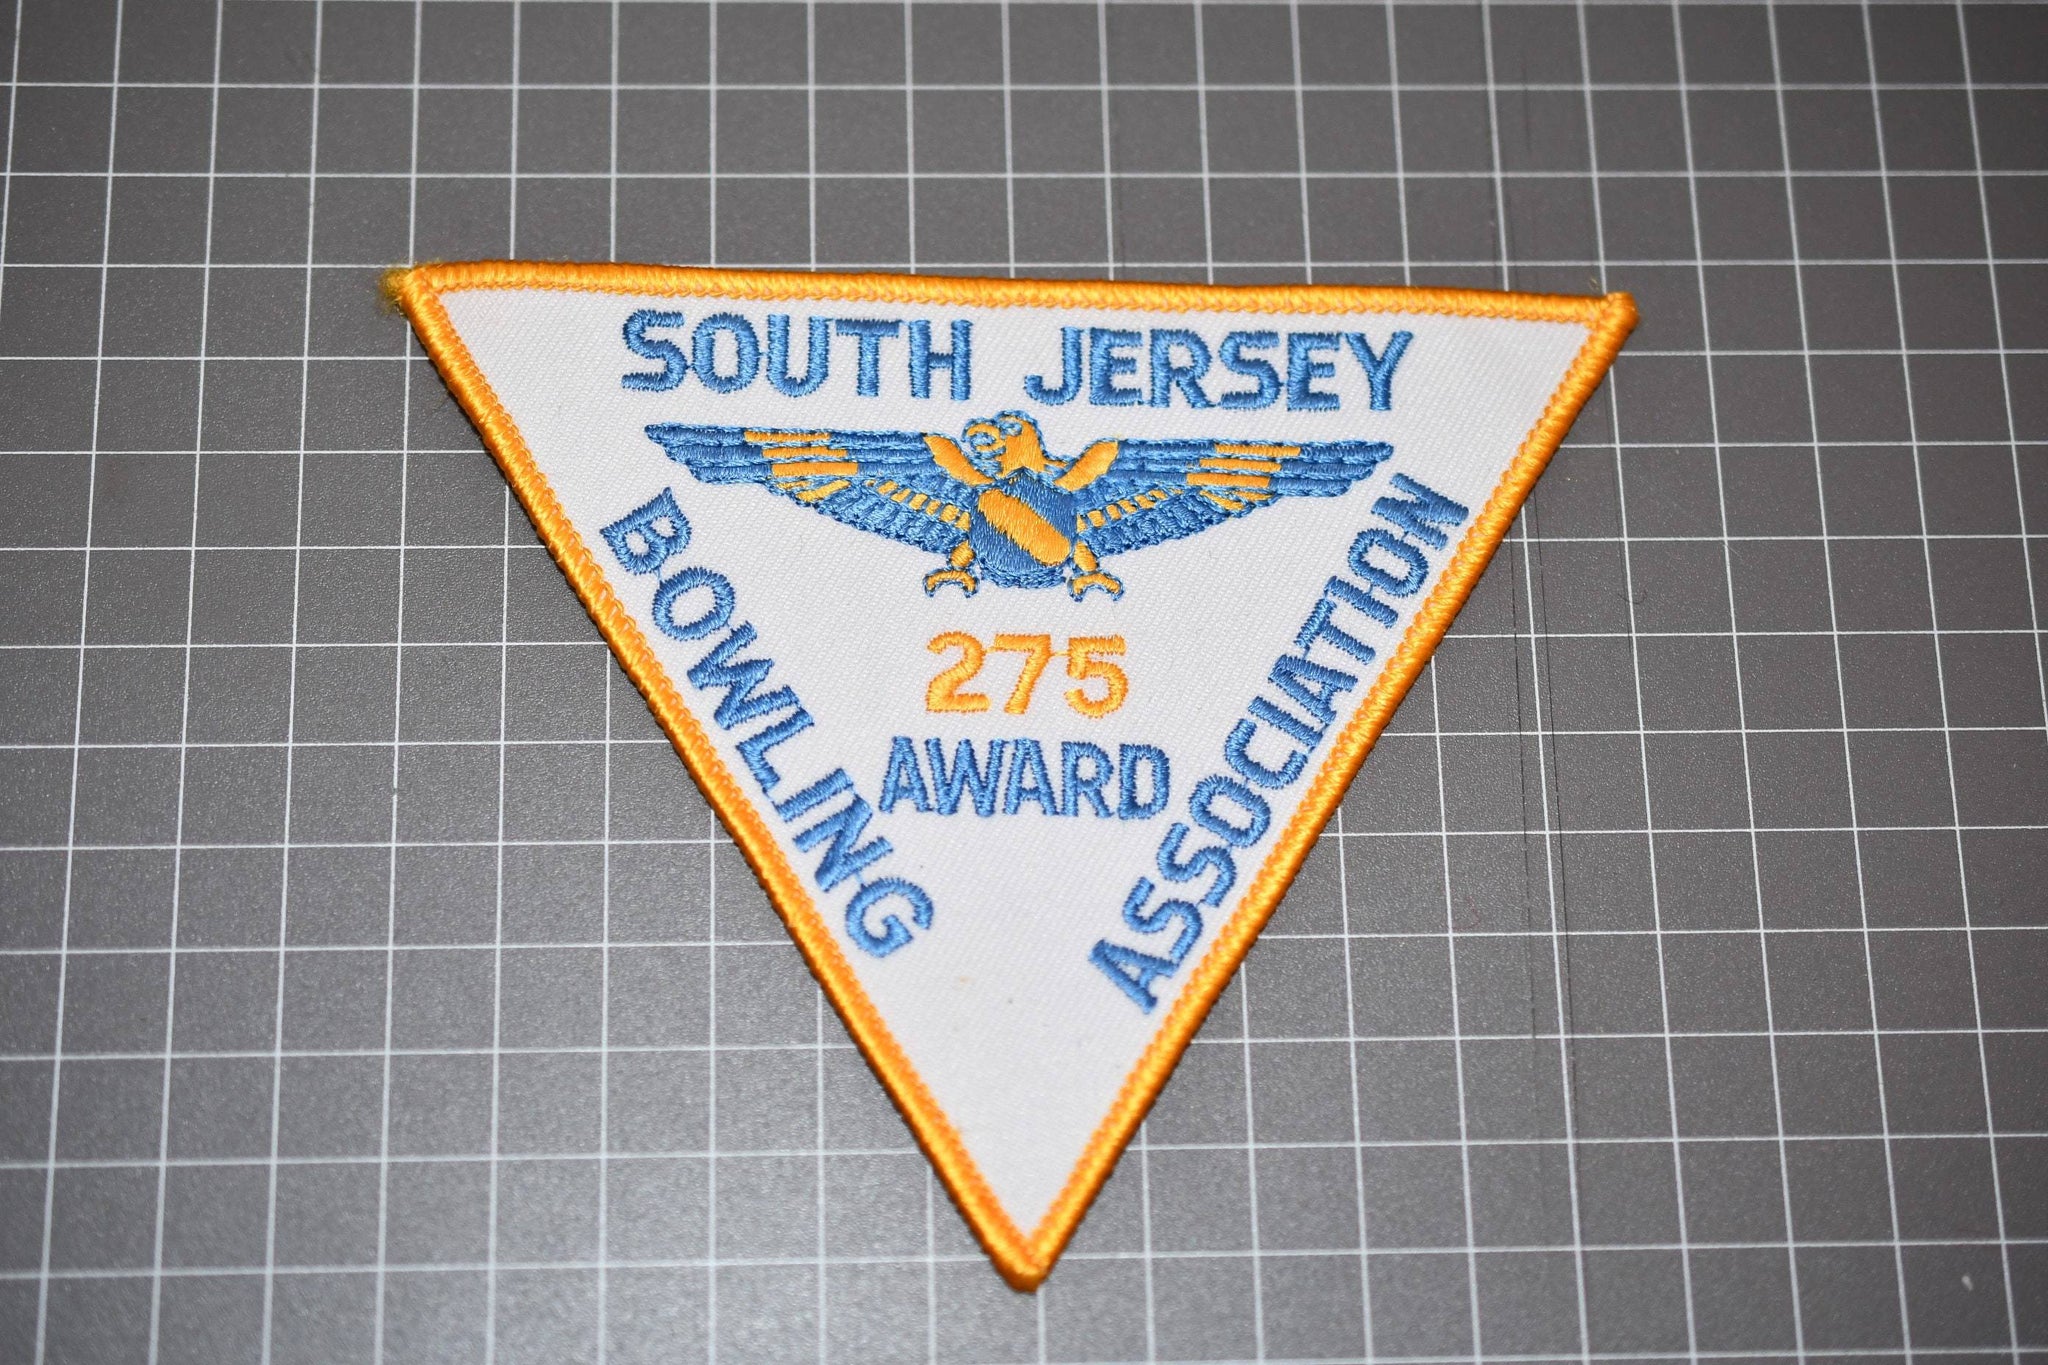 South Jersey NJ Bowling Association 275 Award Patch (B21-144)